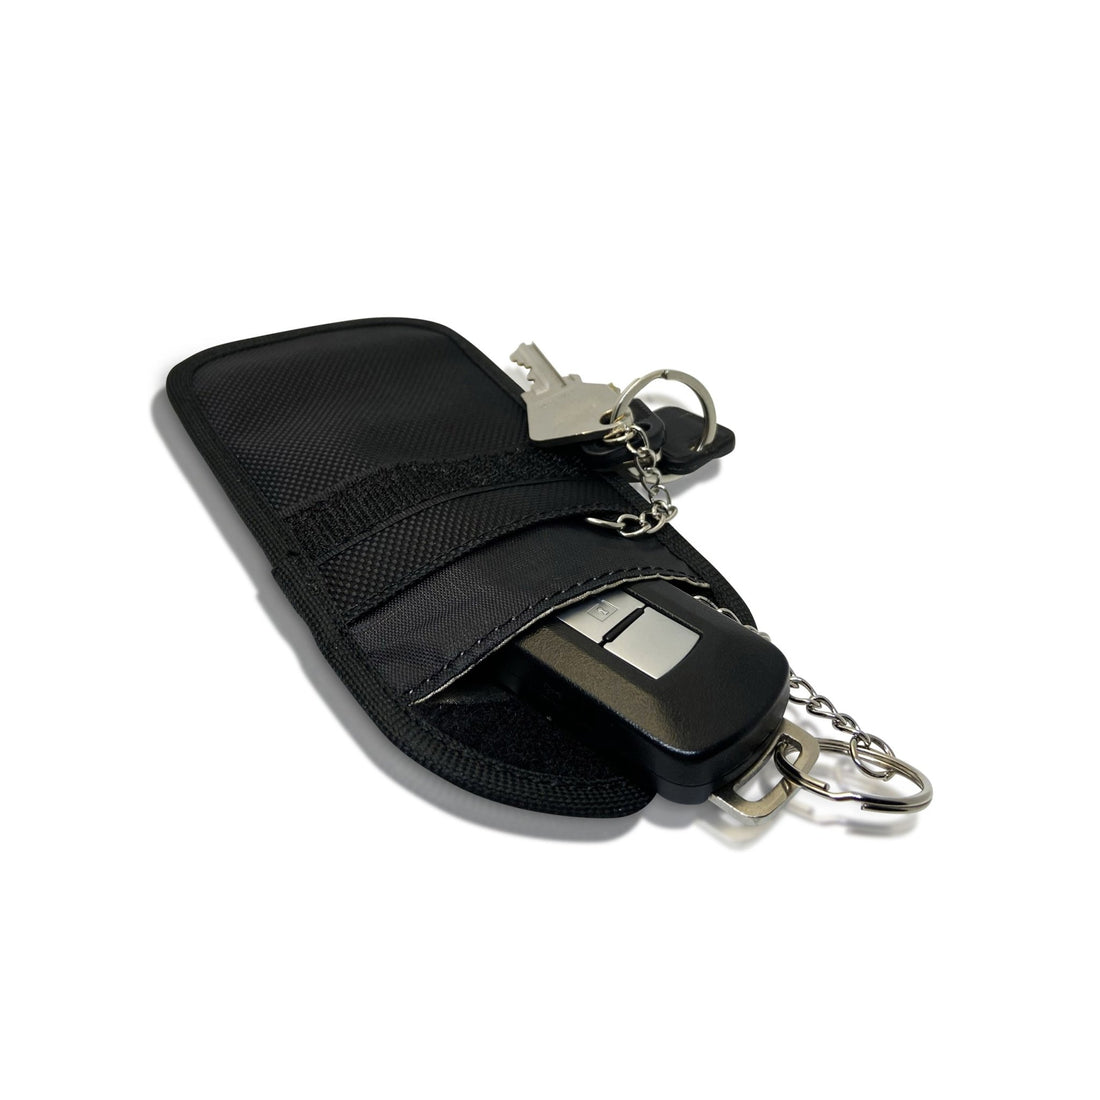 Keyless Car Key Theft Prevention: Use a Car Key Faraday Bag - Securitybase